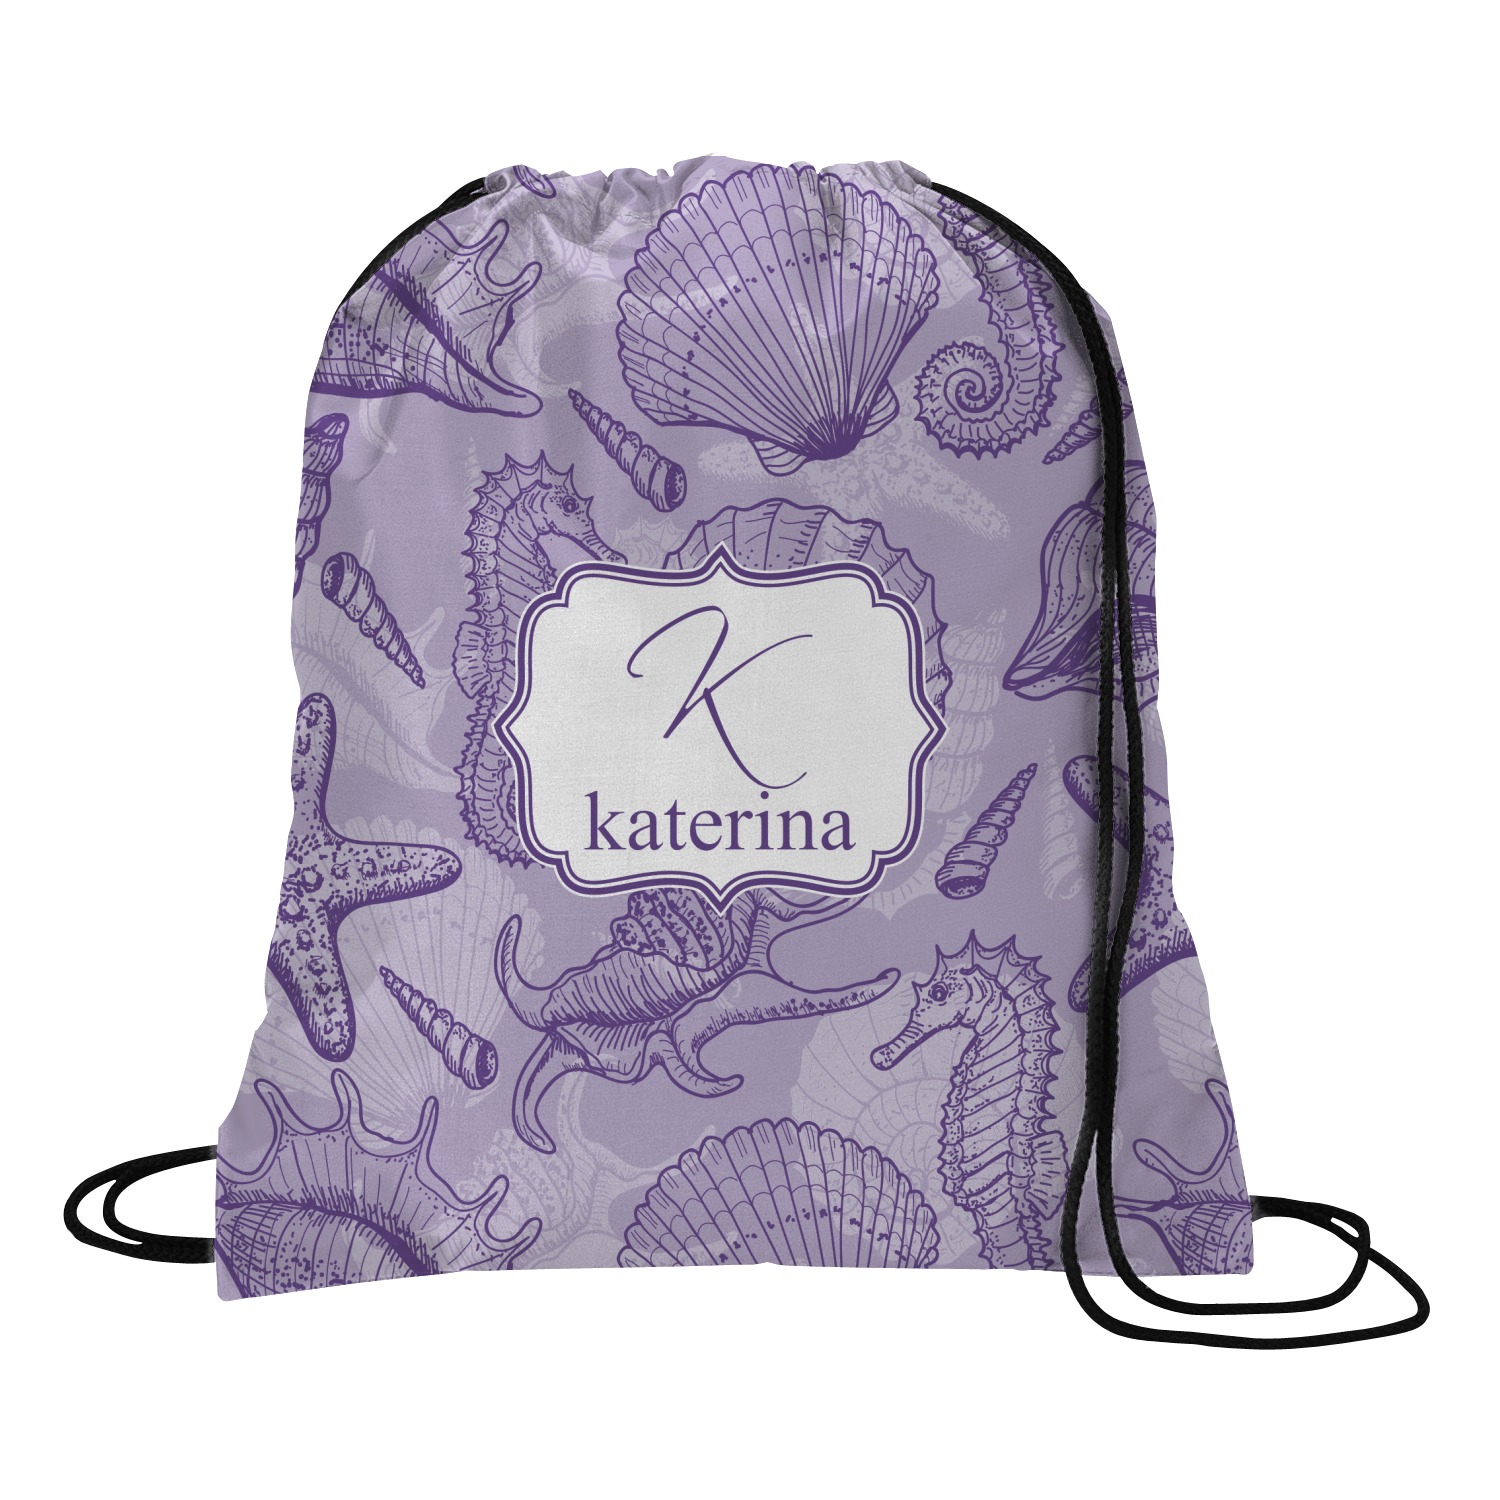 Sea Shells Drawstring Backpack - Large (Personalized) - YouCustomizeIt